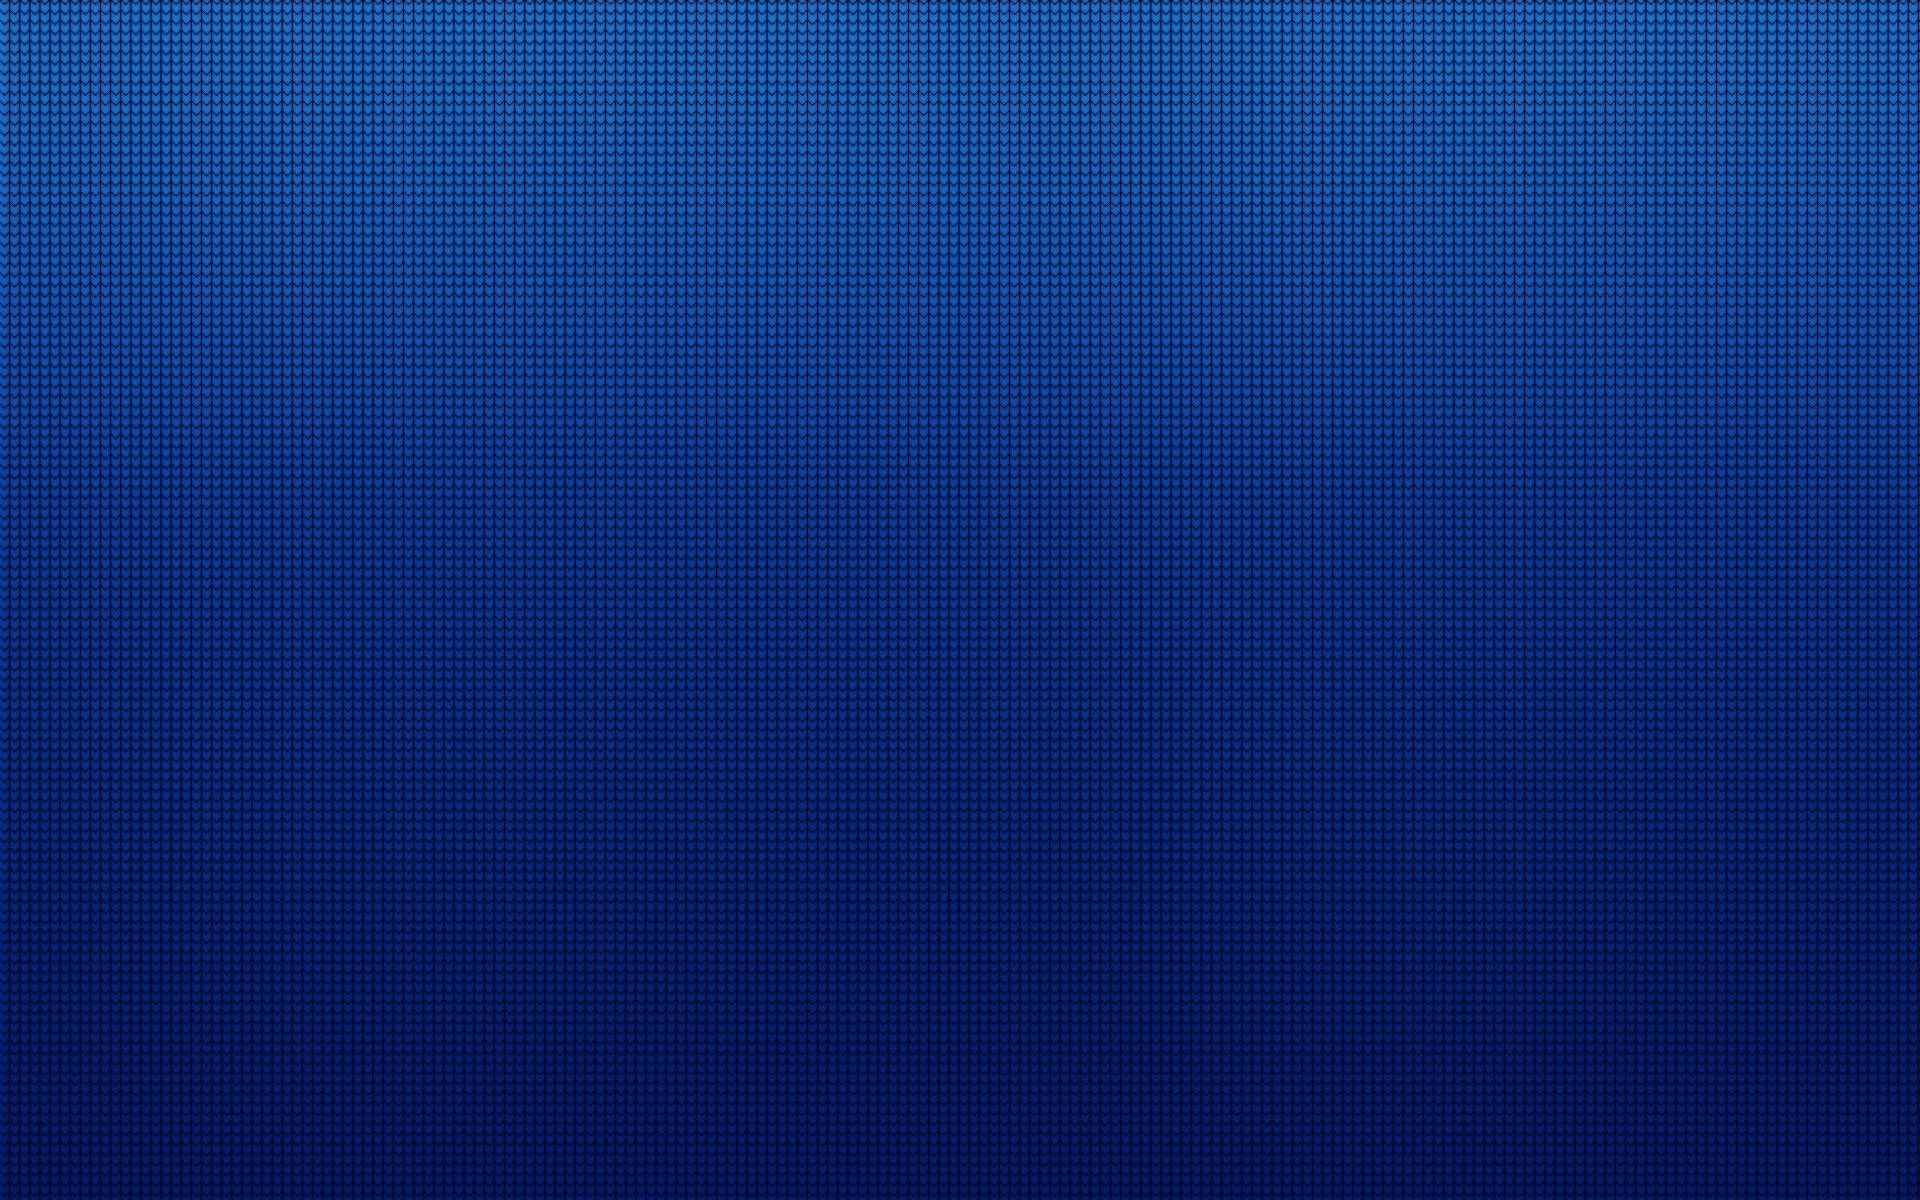 Dark Blue Free Backgrounds Pictures For Desktop Wallpapers - Metallic Blue Wallpaper Hd 1920 X 1080 - HD Wallpaper 